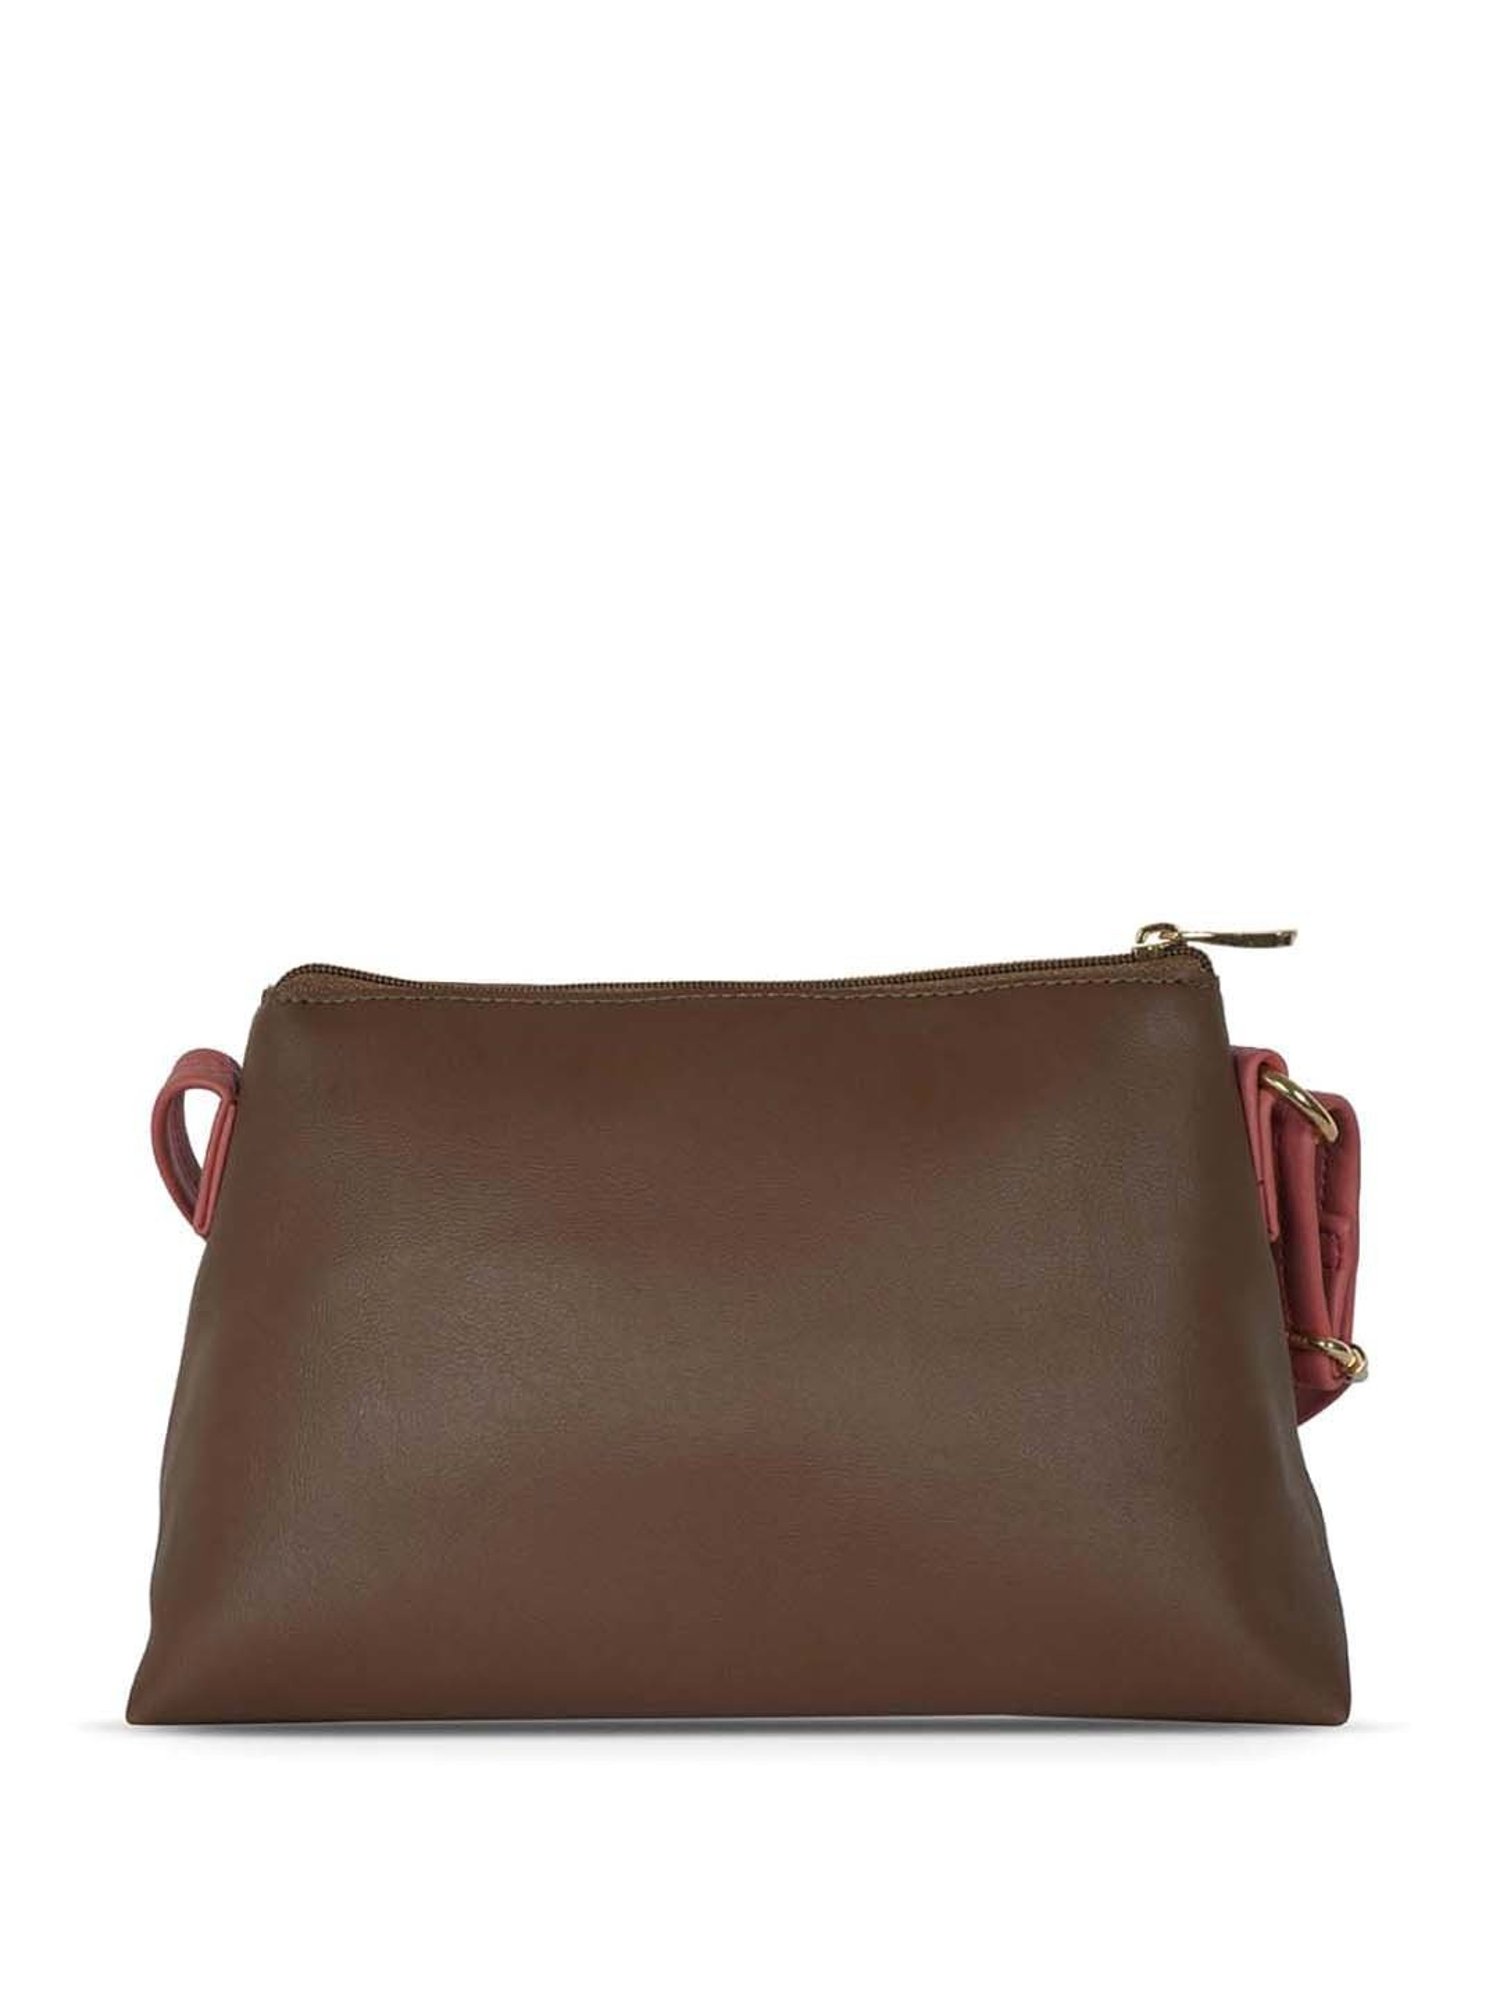 Buy Baggit Women's Handbag (Mud) at Amazon.in